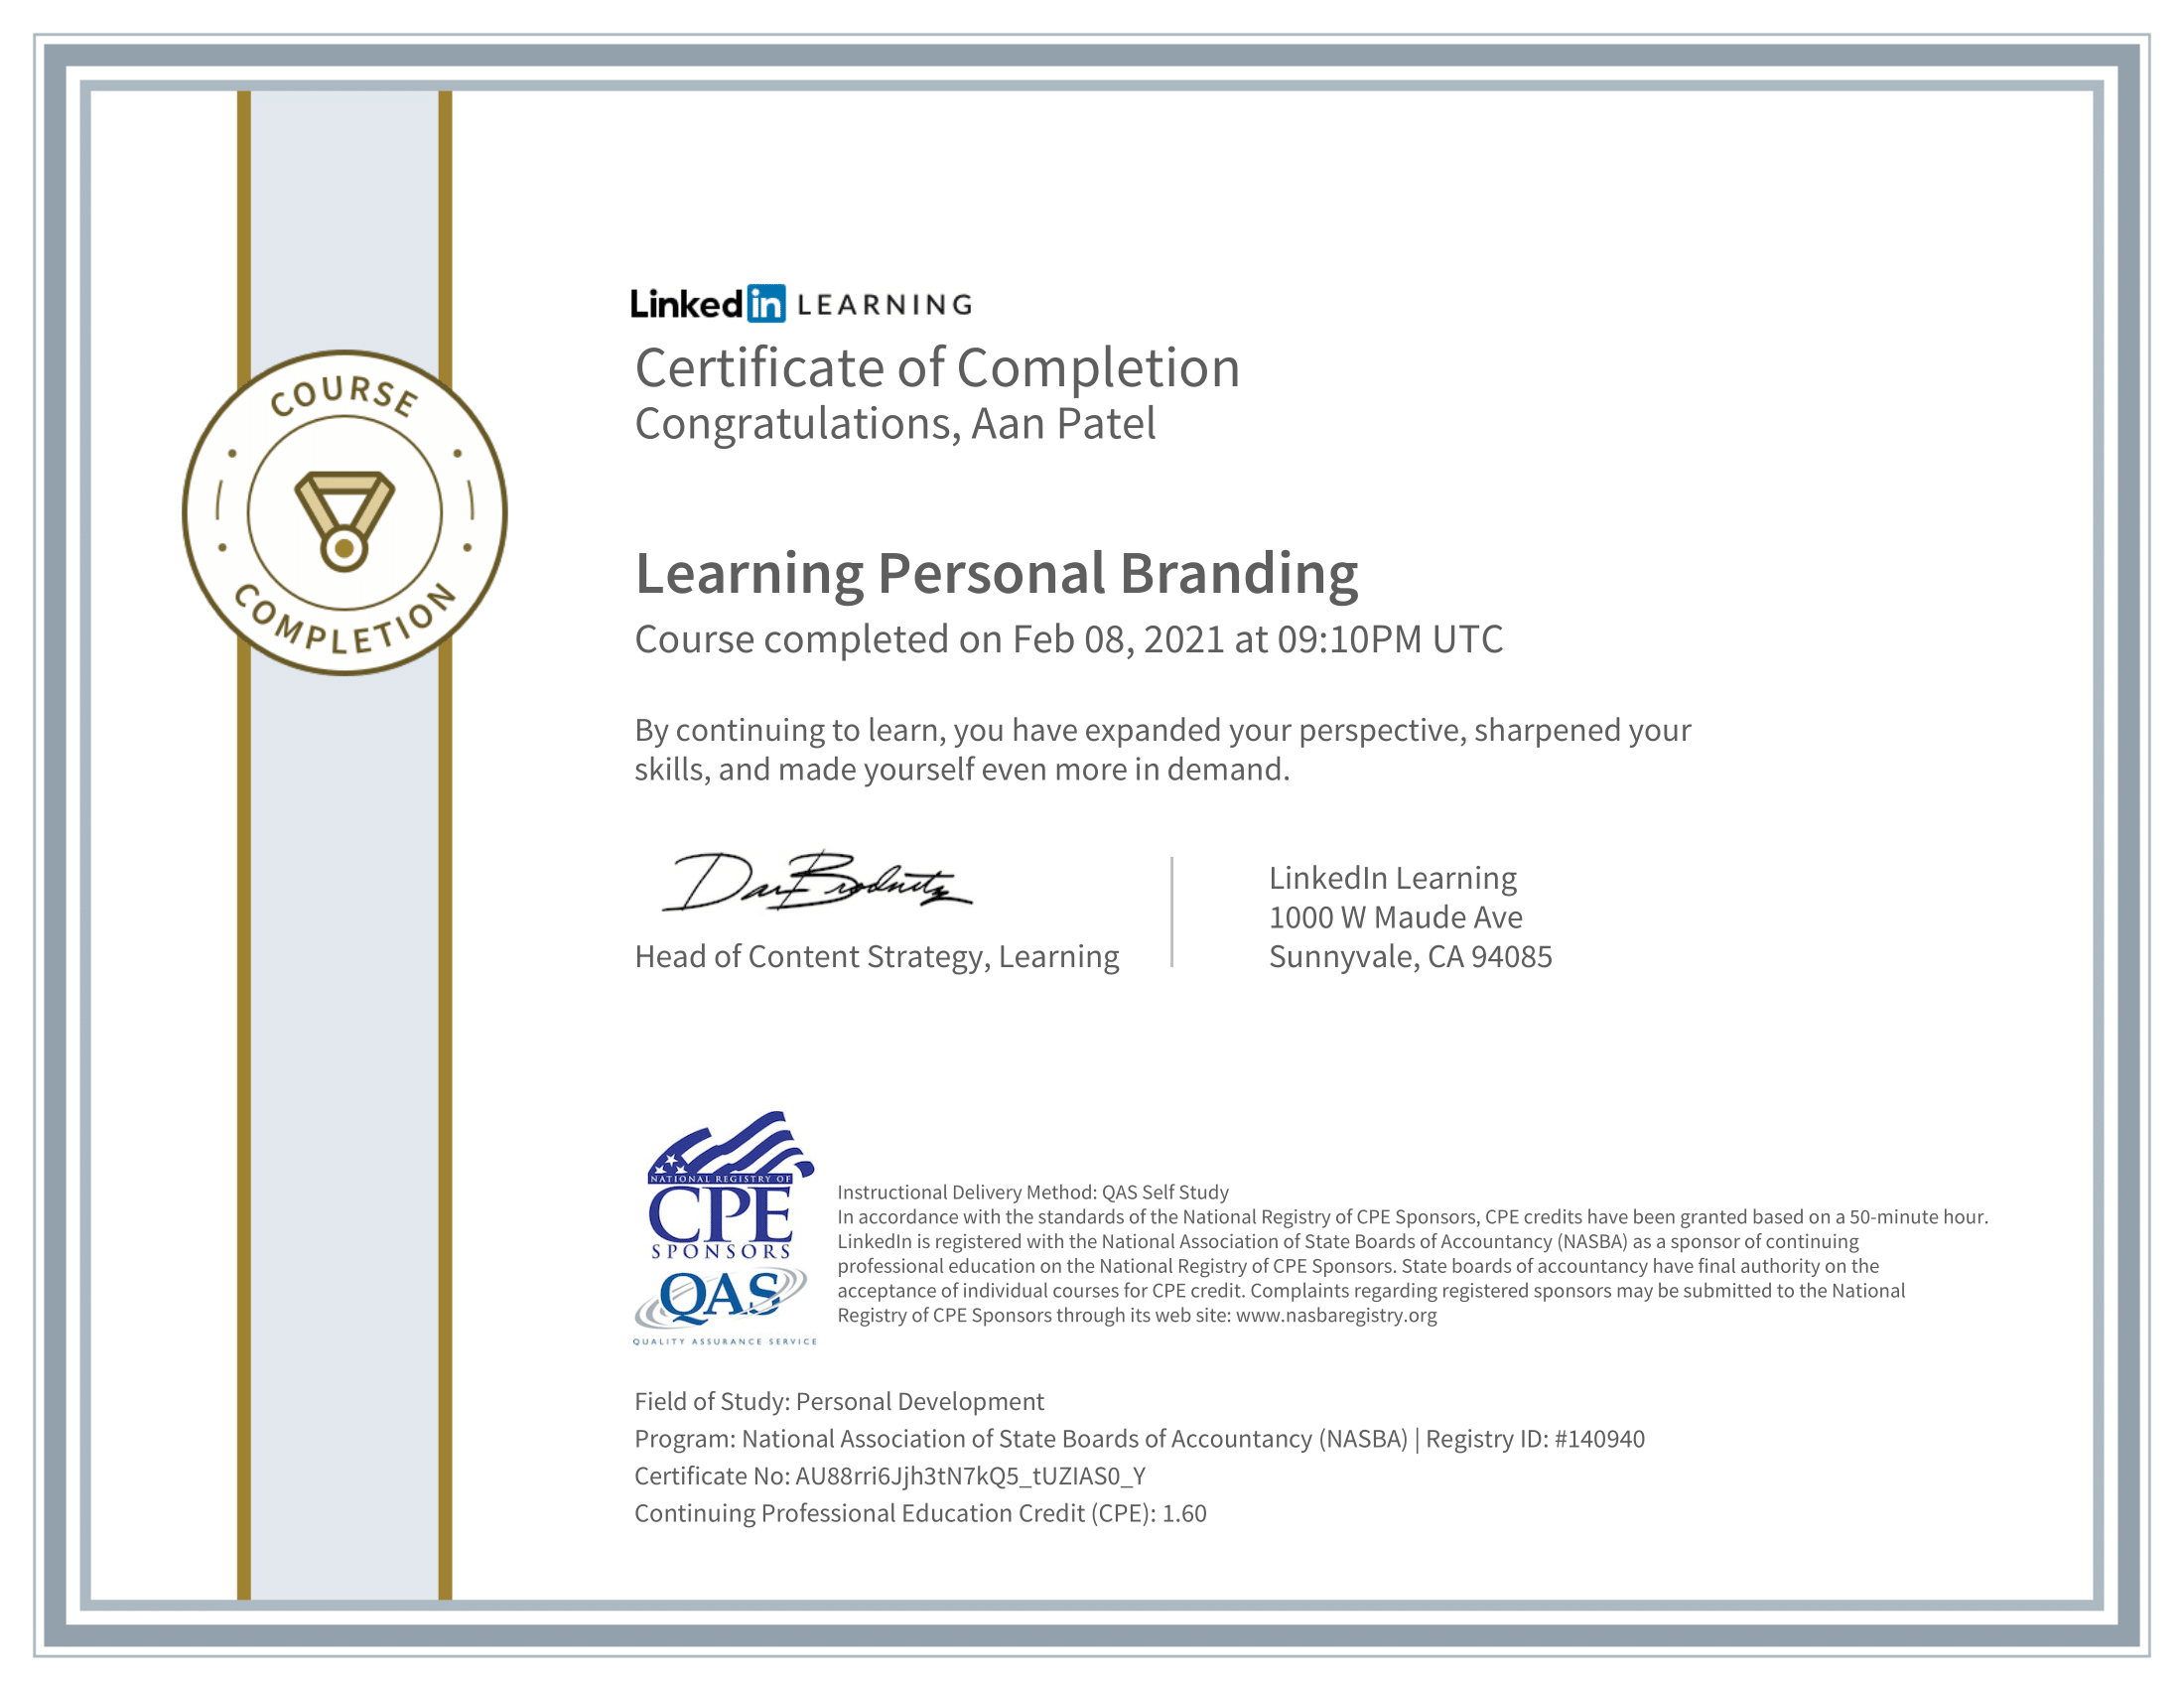 A LinkedIn Learning certificate